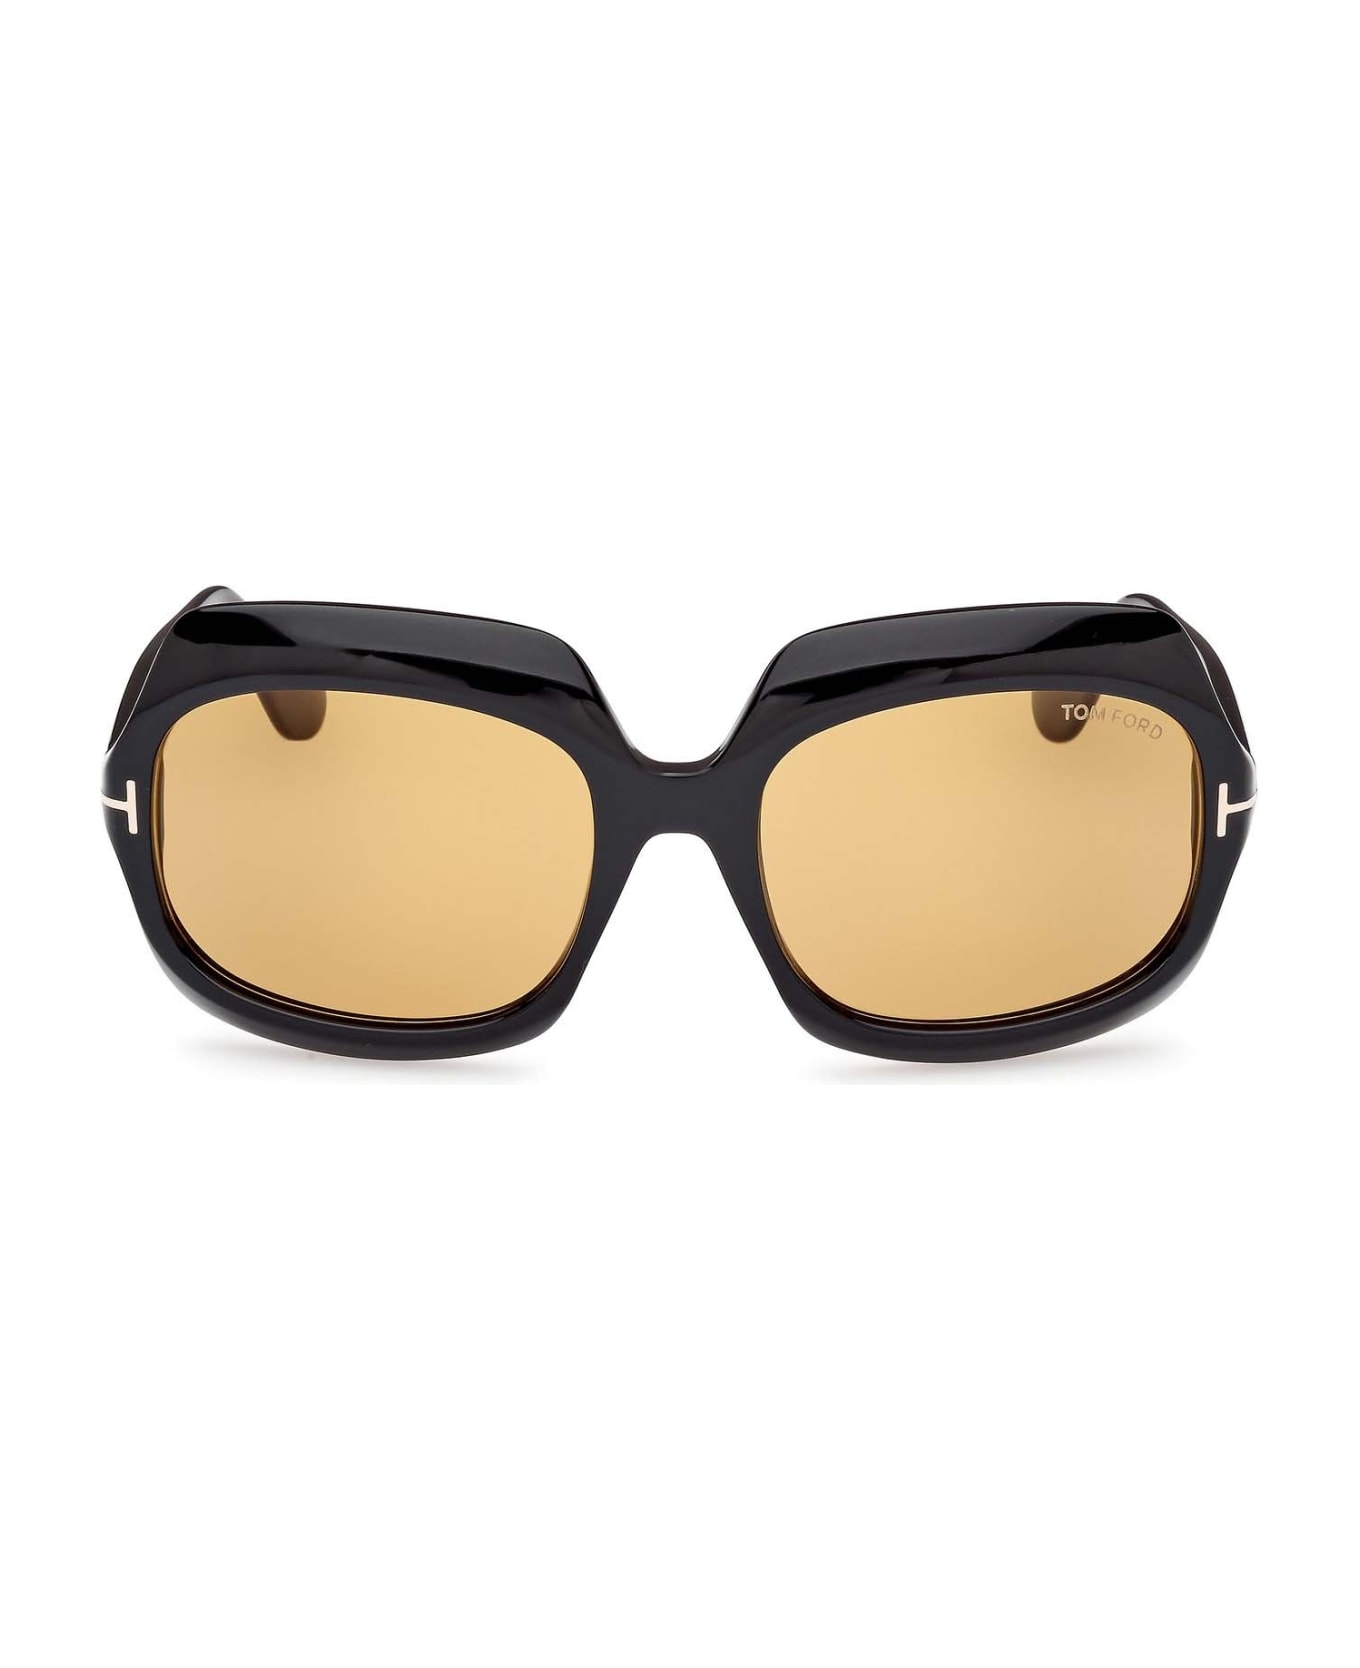 Tom Ford Eyewear Sunglasses - Nero/Giallo